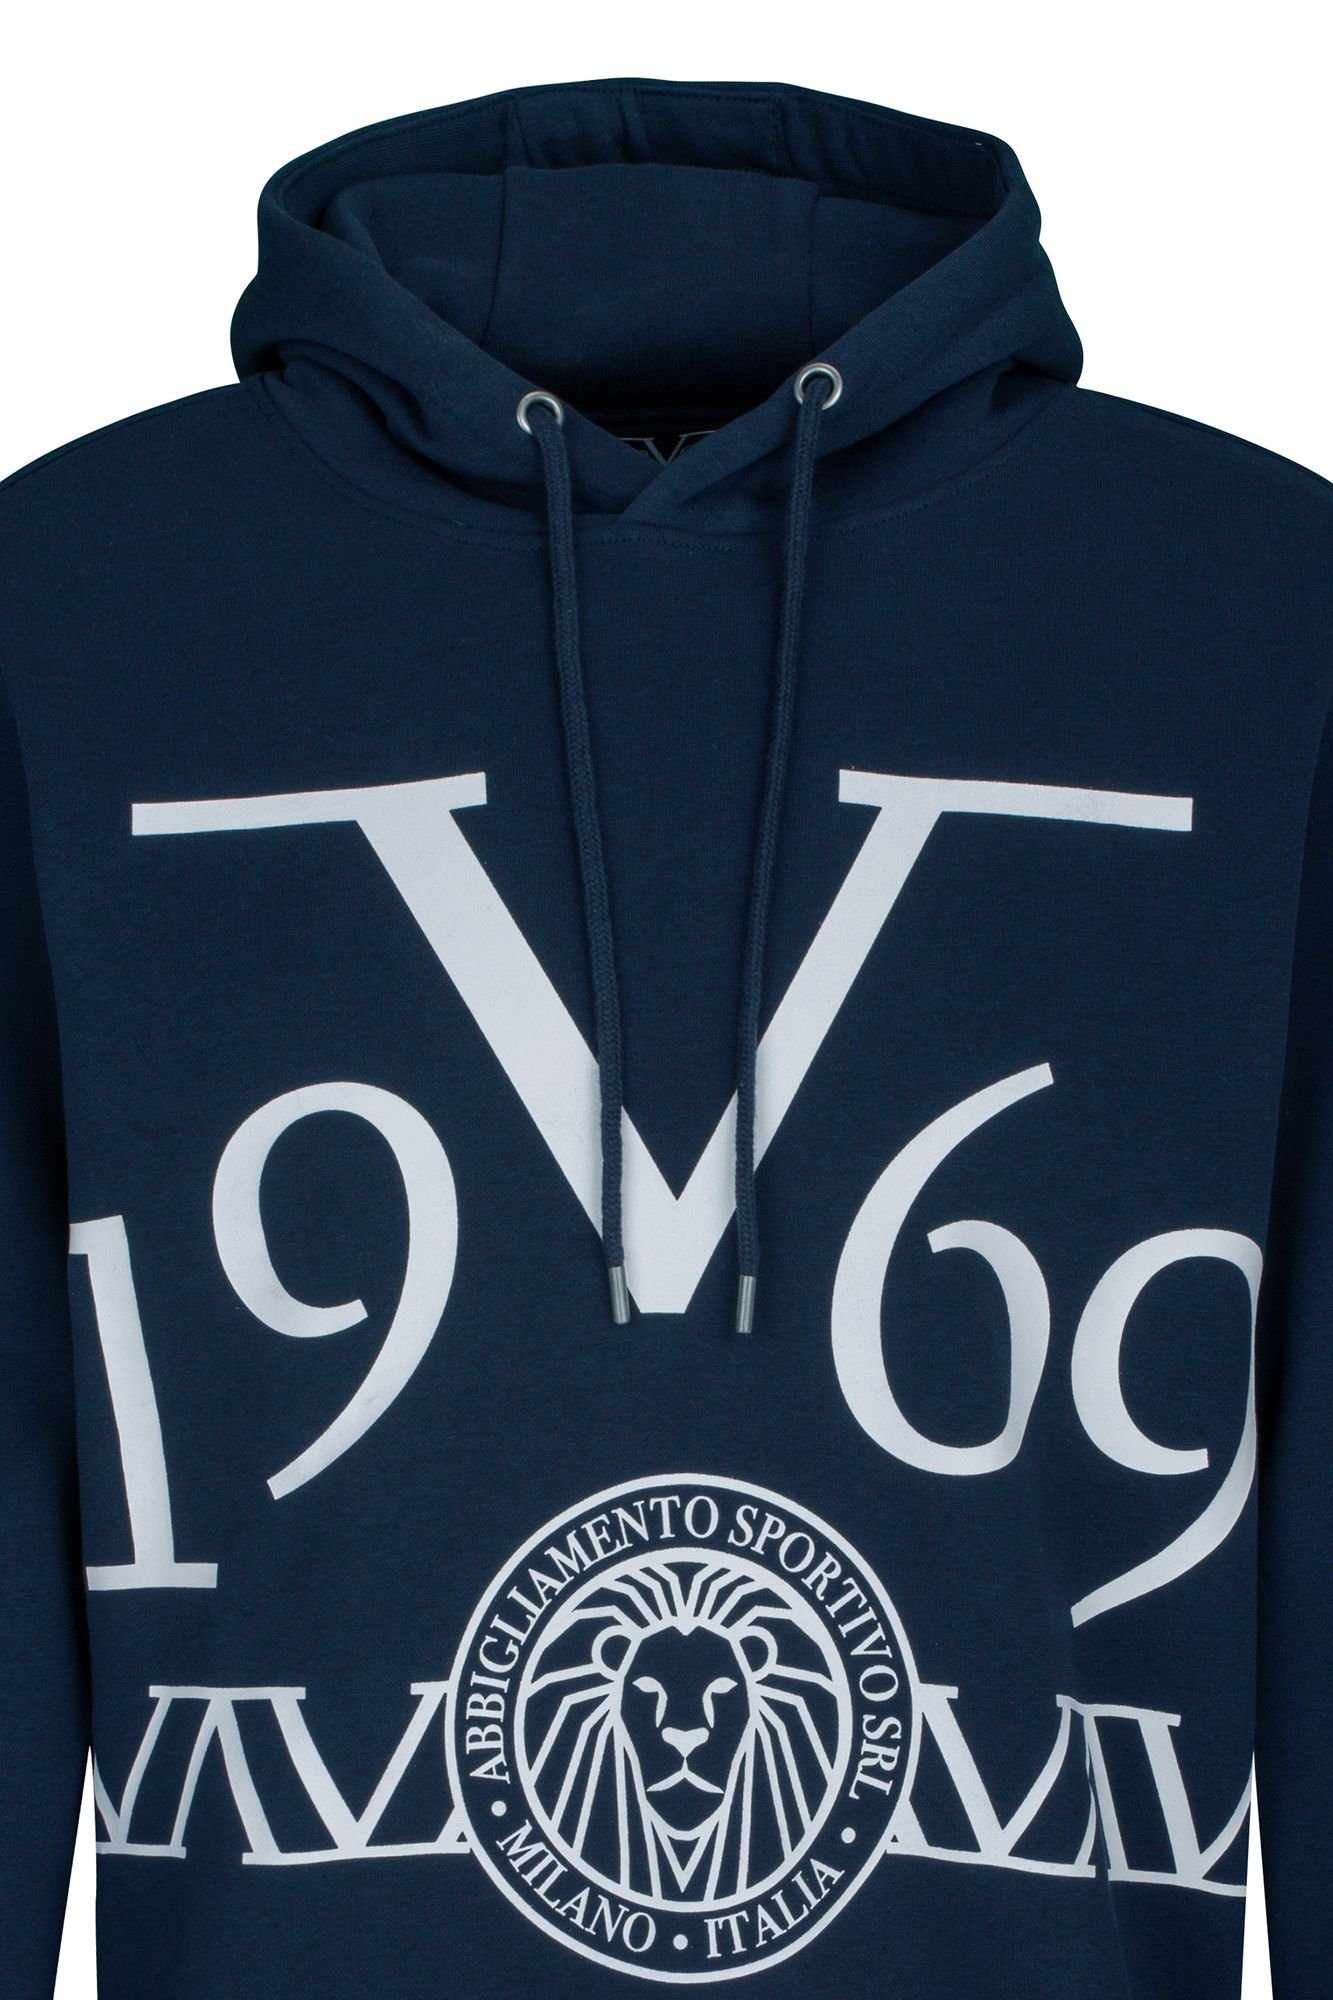 Sweatshirt Versace 19V69 by Christof Italia